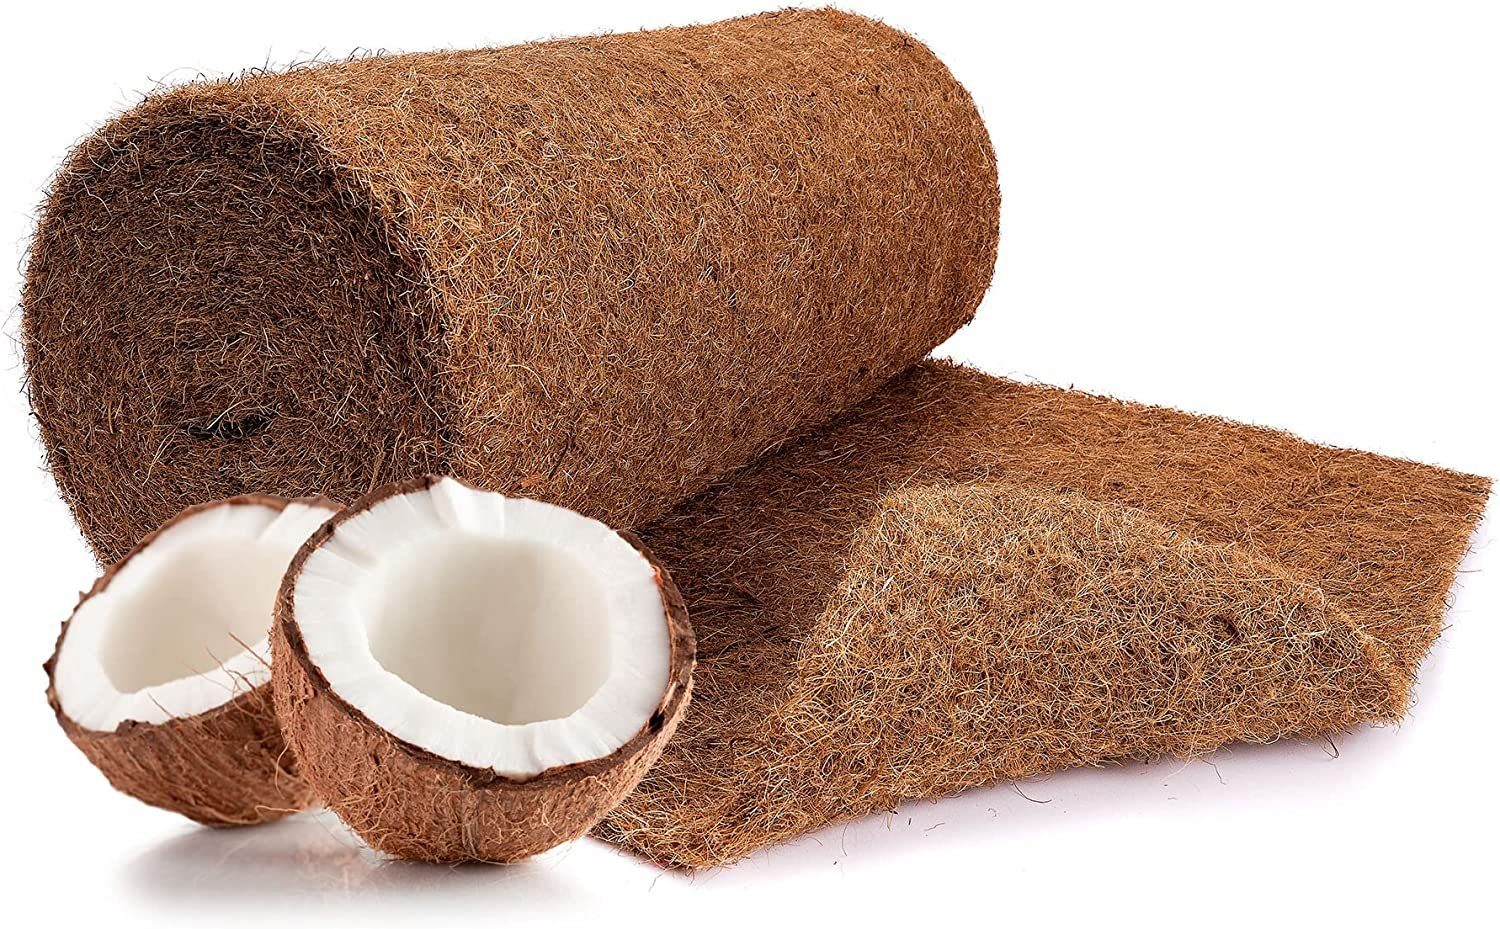 Nagerteppich.de Kokosmatte Kokosmatte, Winterschutz und Kälteschutz für Pflanzen, Baumschutz